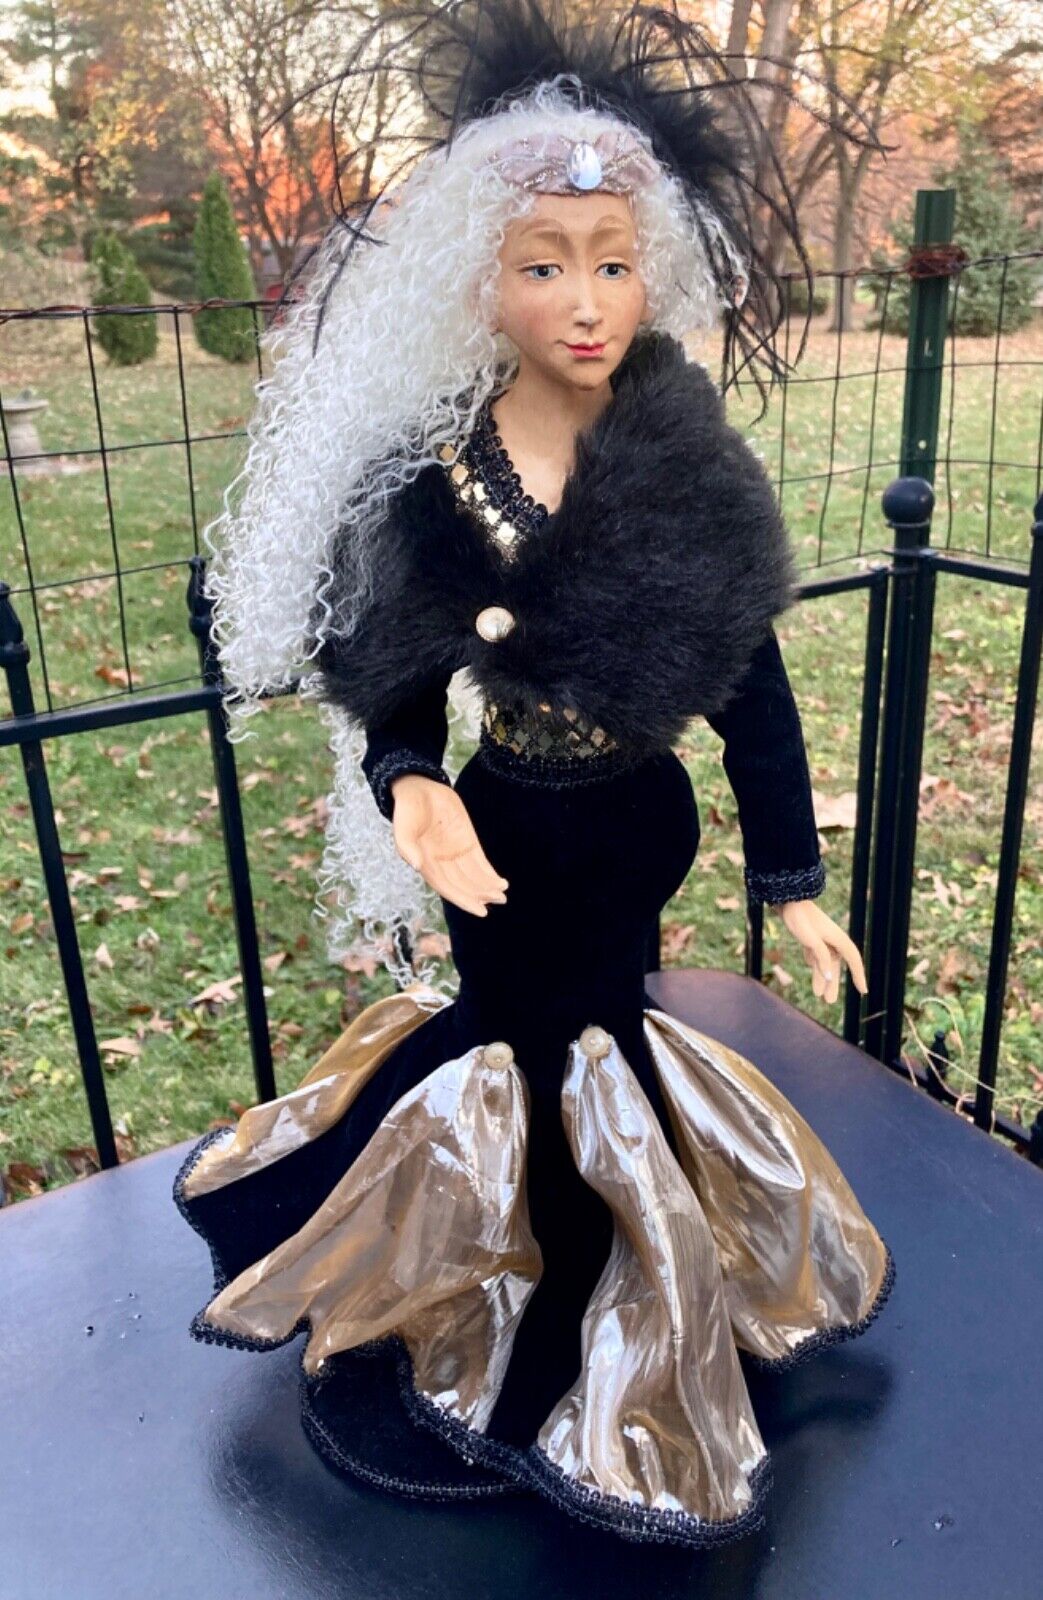 Handmade Fairy Doll in Black and Gold Velvet Dress composite face and hands 24”